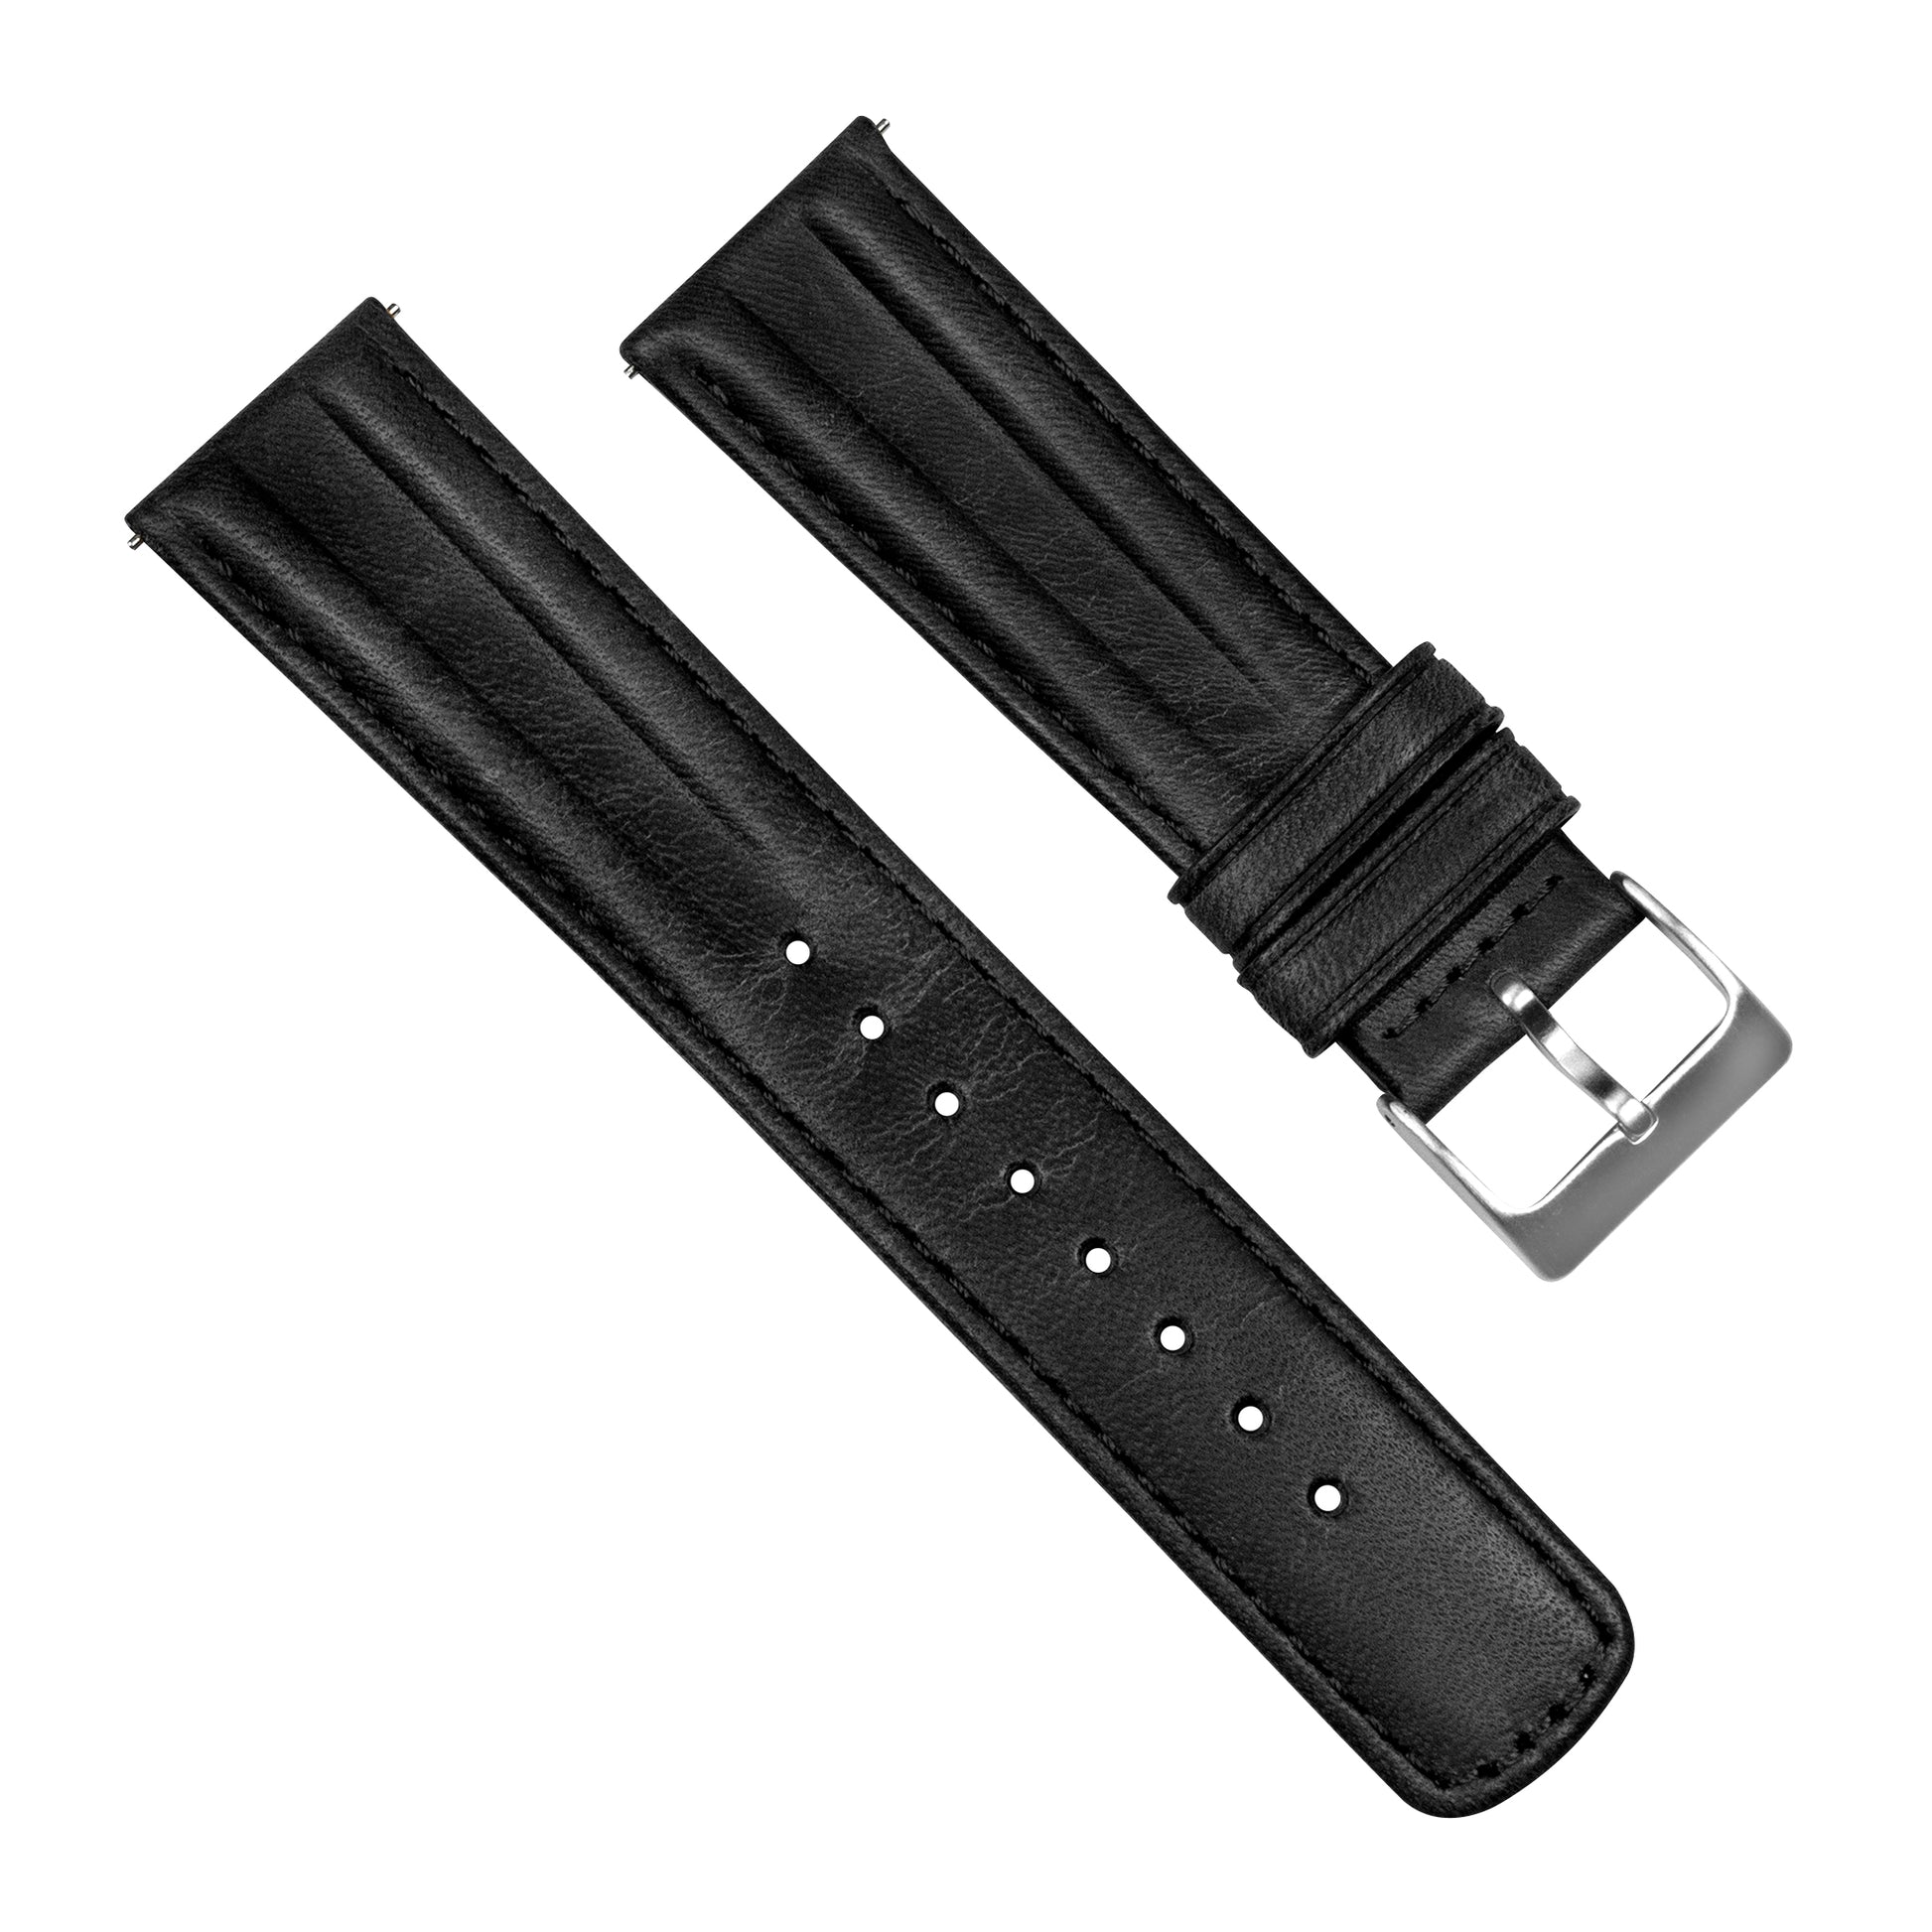 Amazfit Strap Leather Series - Classic Edition, 22mm / Black